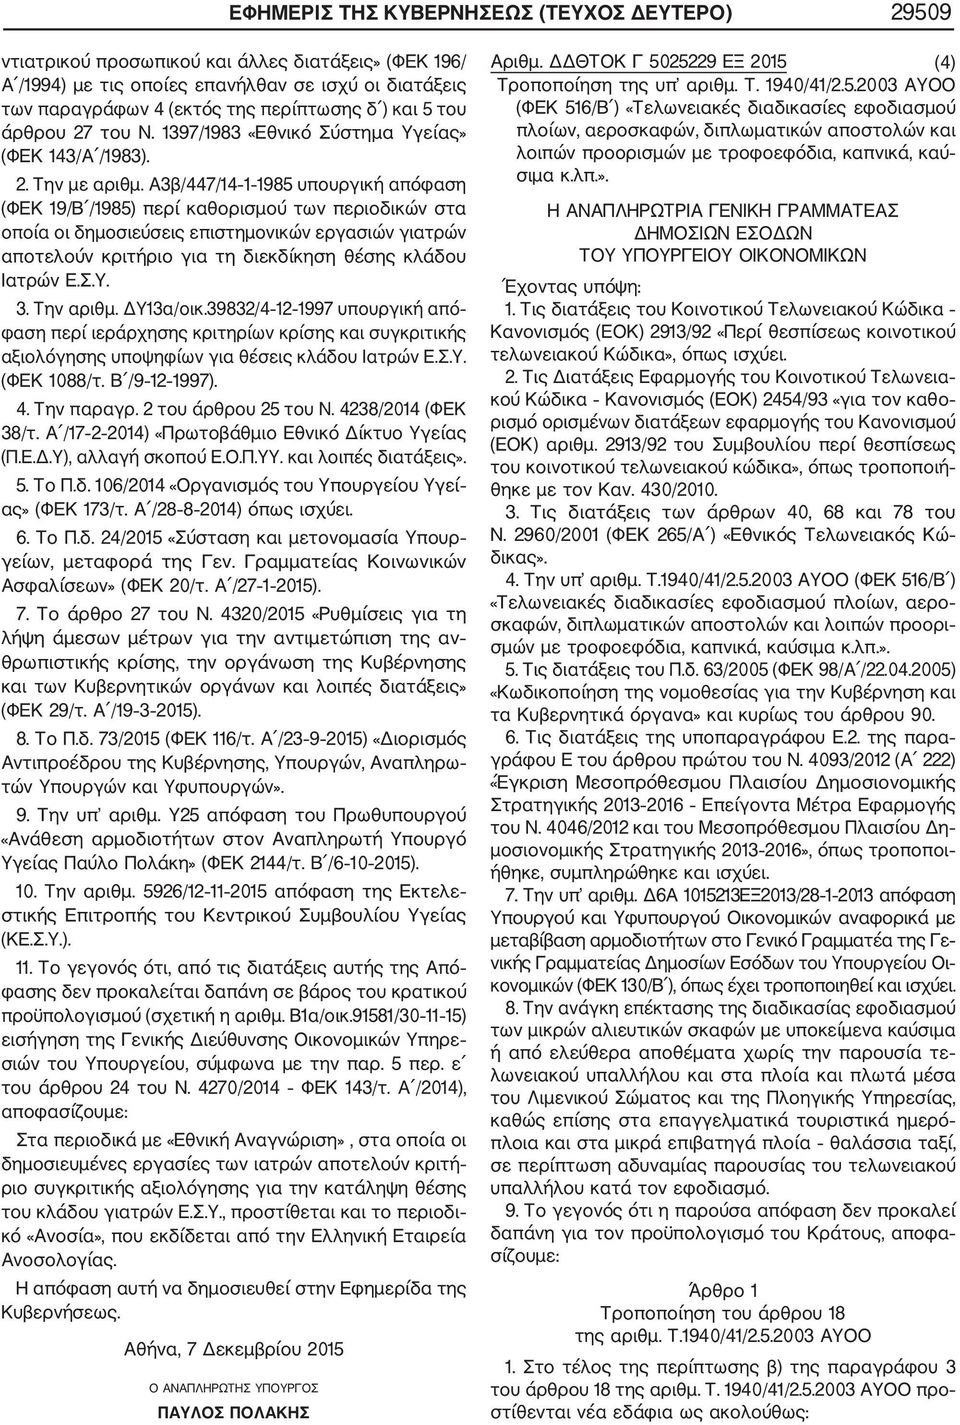 A3β/447/14 1 1985 υπουργική απόφαση (ΦΕΚ 19/Β /1985) περί καθορισμού των περιοδικών στα οποία οι δημοσιεύσεις επιστημονικών εργασιών γιατρών αποτελούν κριτήριο για τη διεκδίκηση θέσης κλάδου Ιατρών Ε.